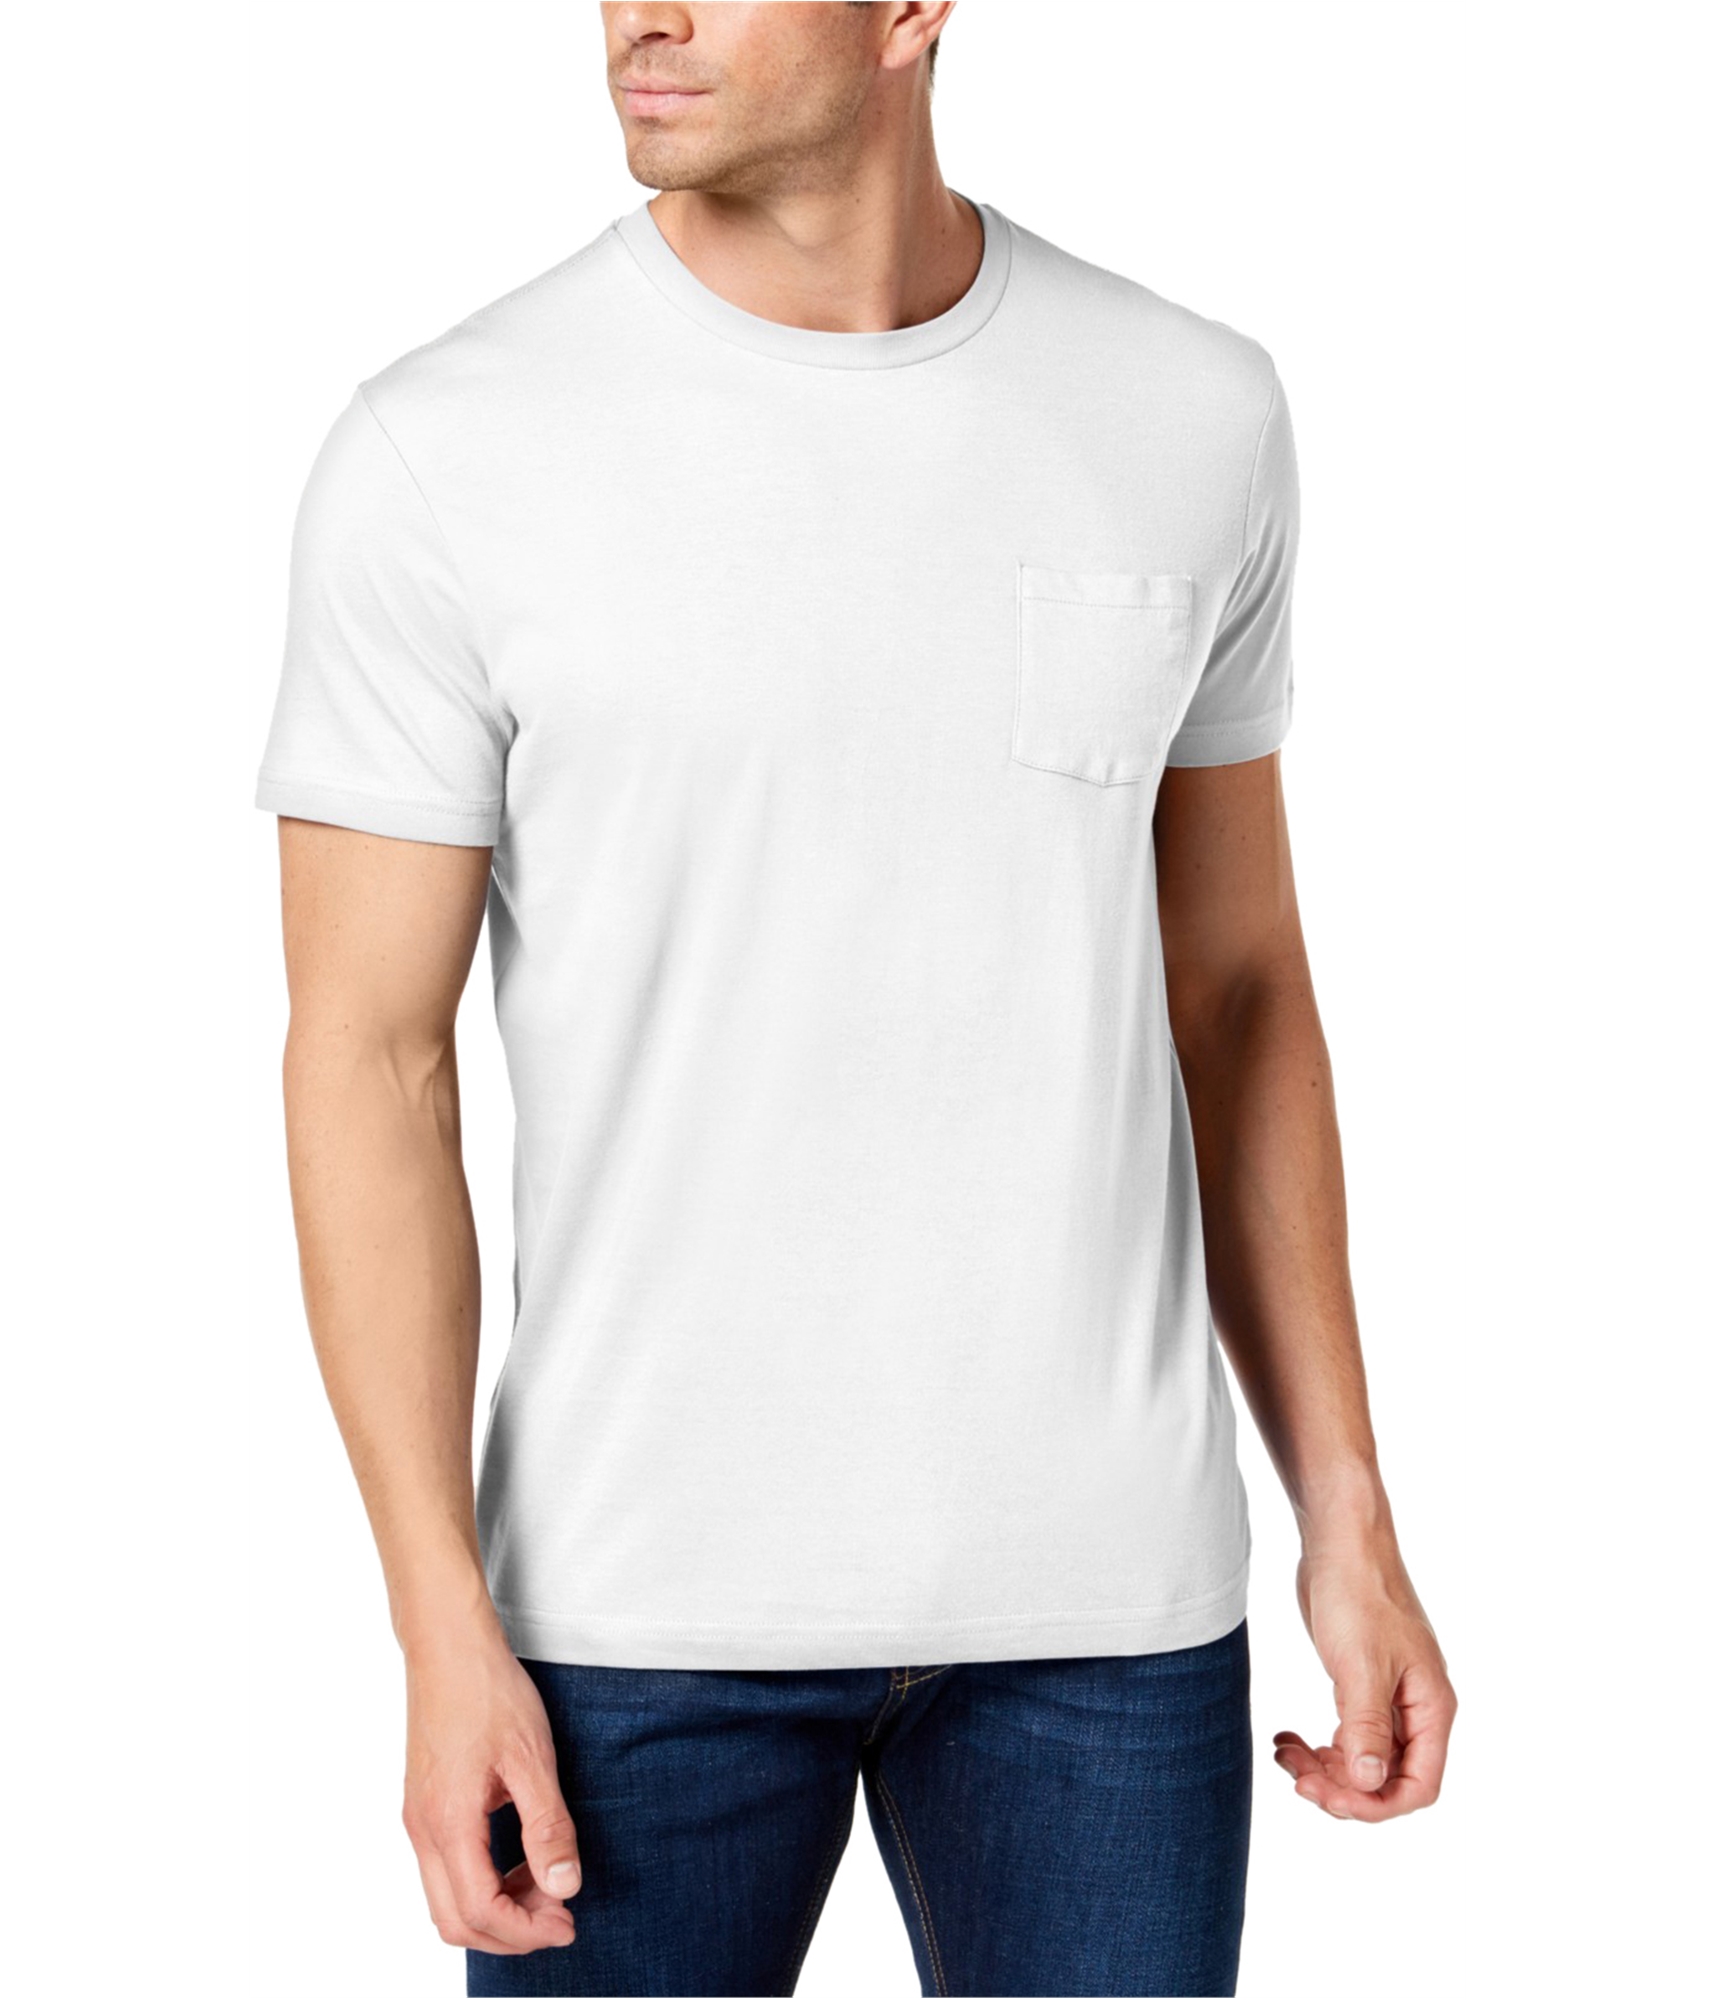 Club Room Mens Pocket Basic T-Shirt | eBay